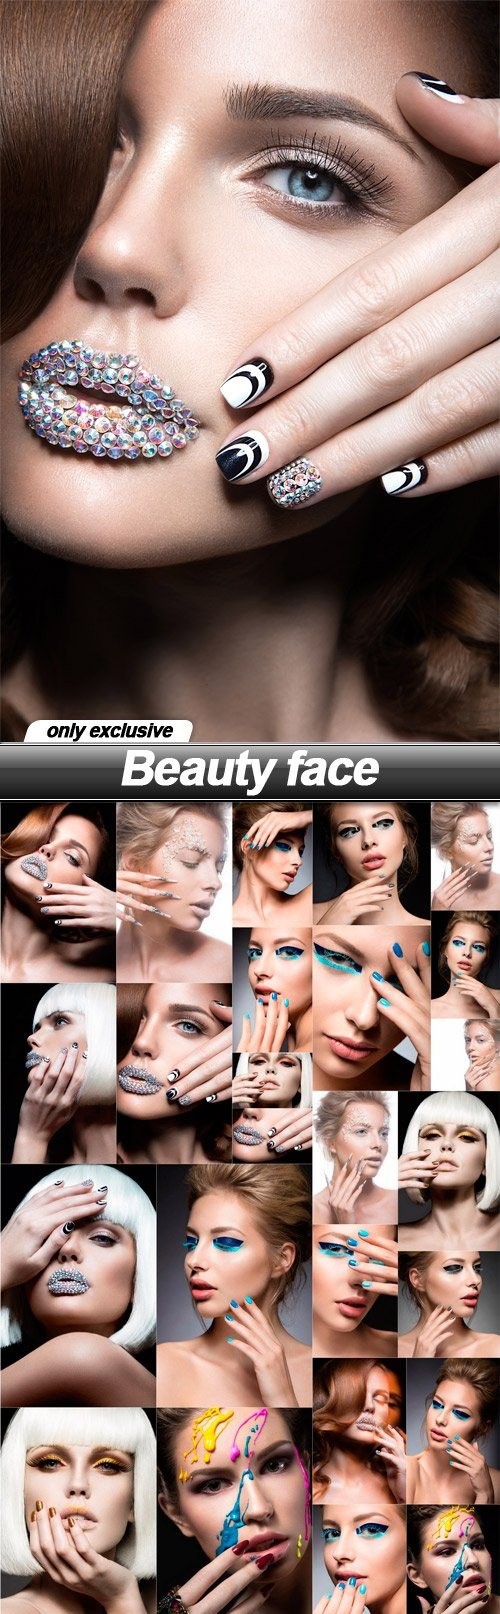 Beauty face - 25 UHQ JPEG